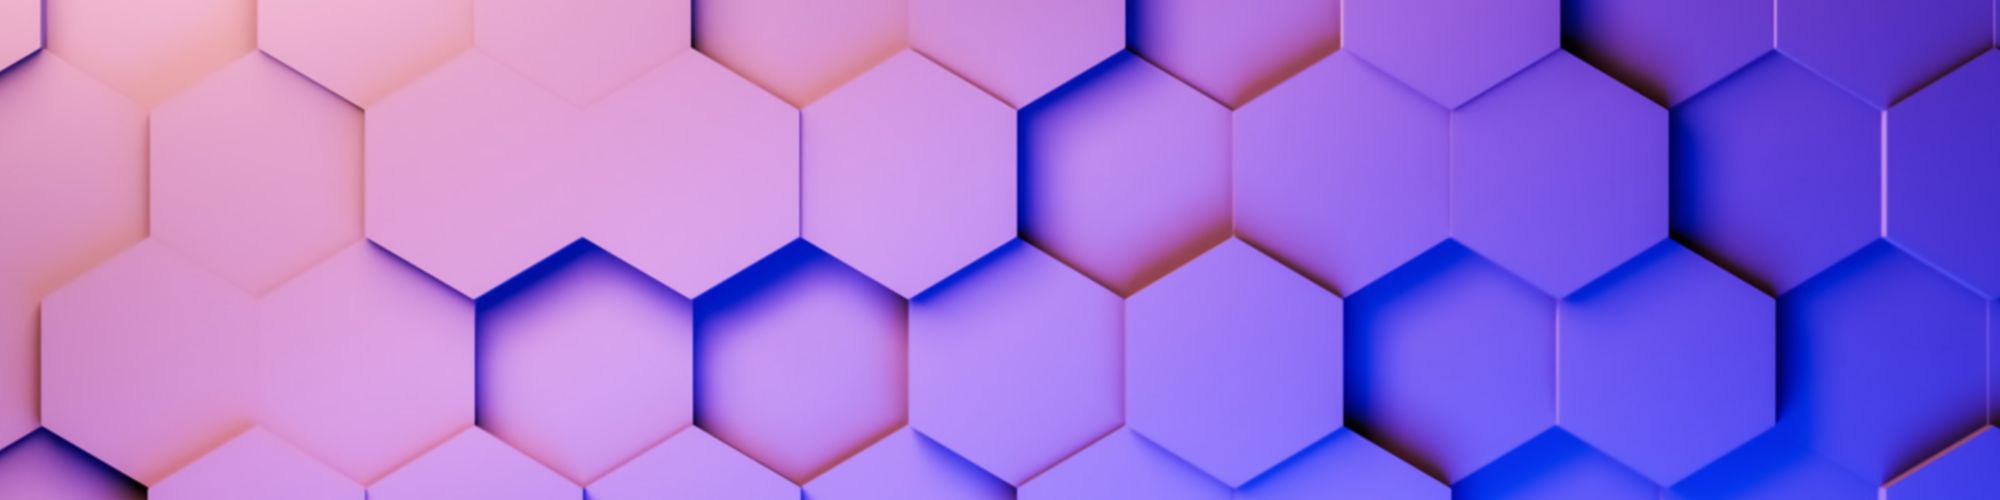 hexagons purple 3d background